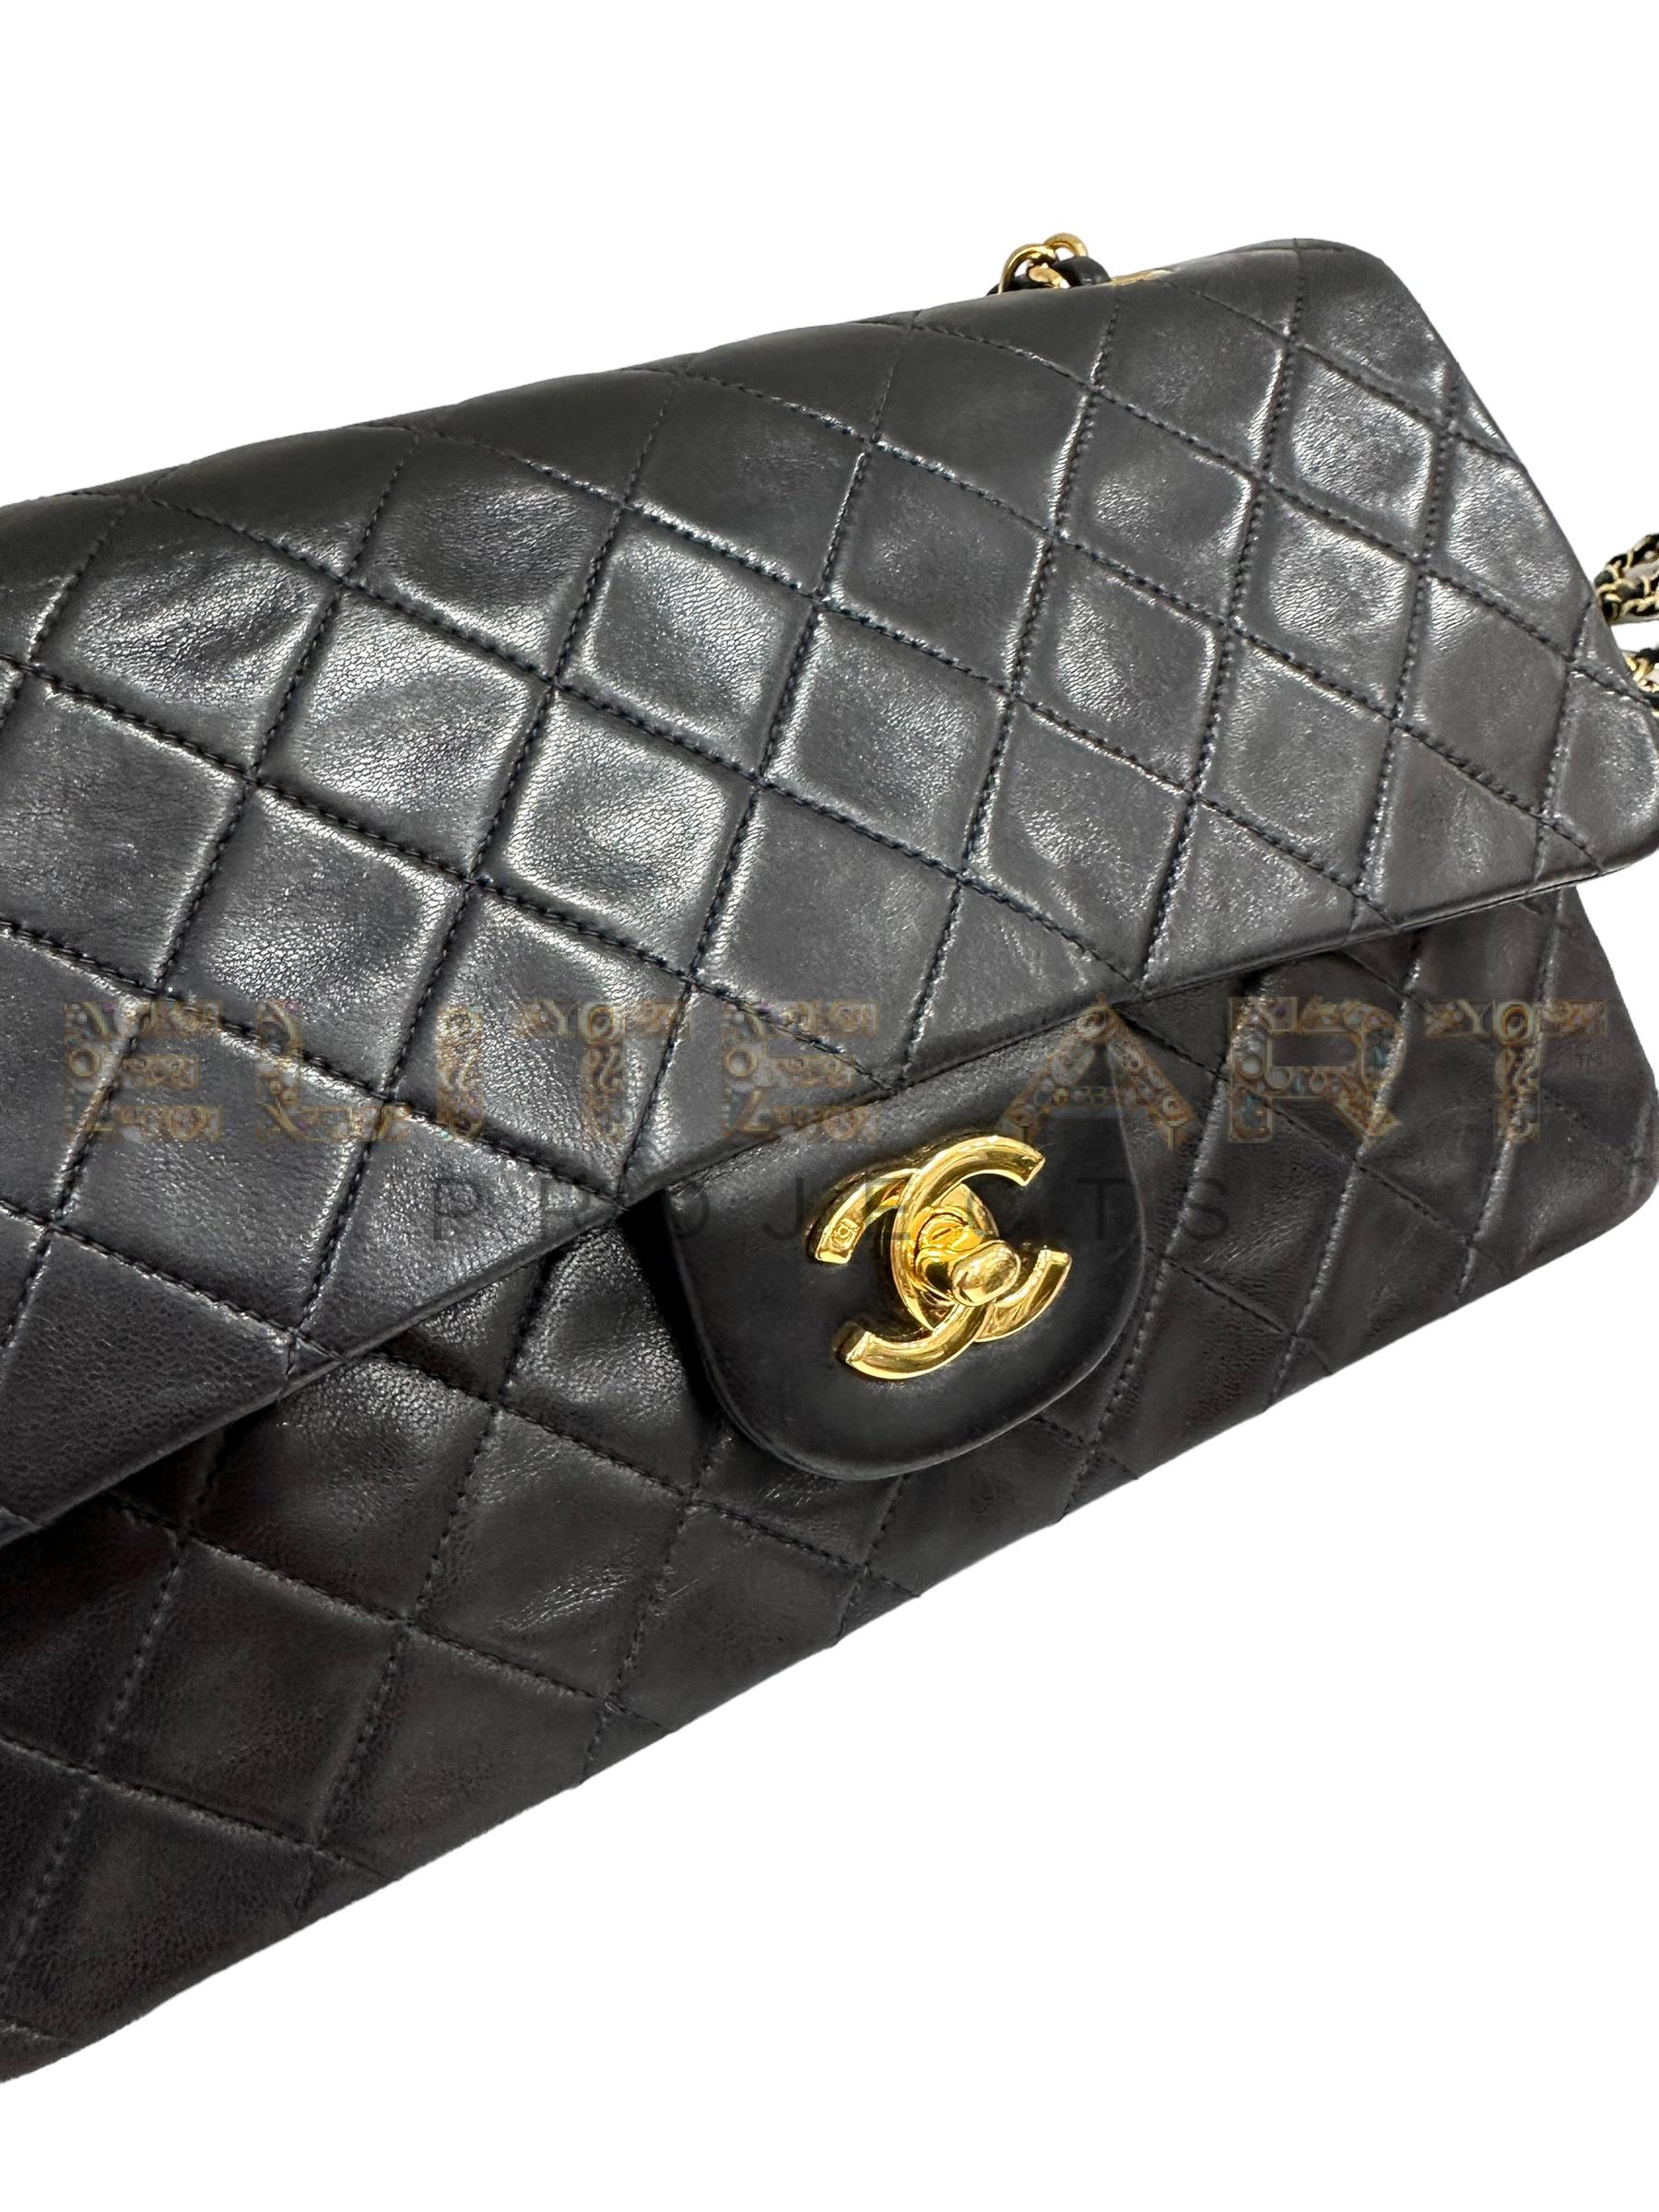 Chanel, Timeless bag, 2.55 model, chestnut brown leather, gold accents, double flap design, CC logo, Bordeaux interior